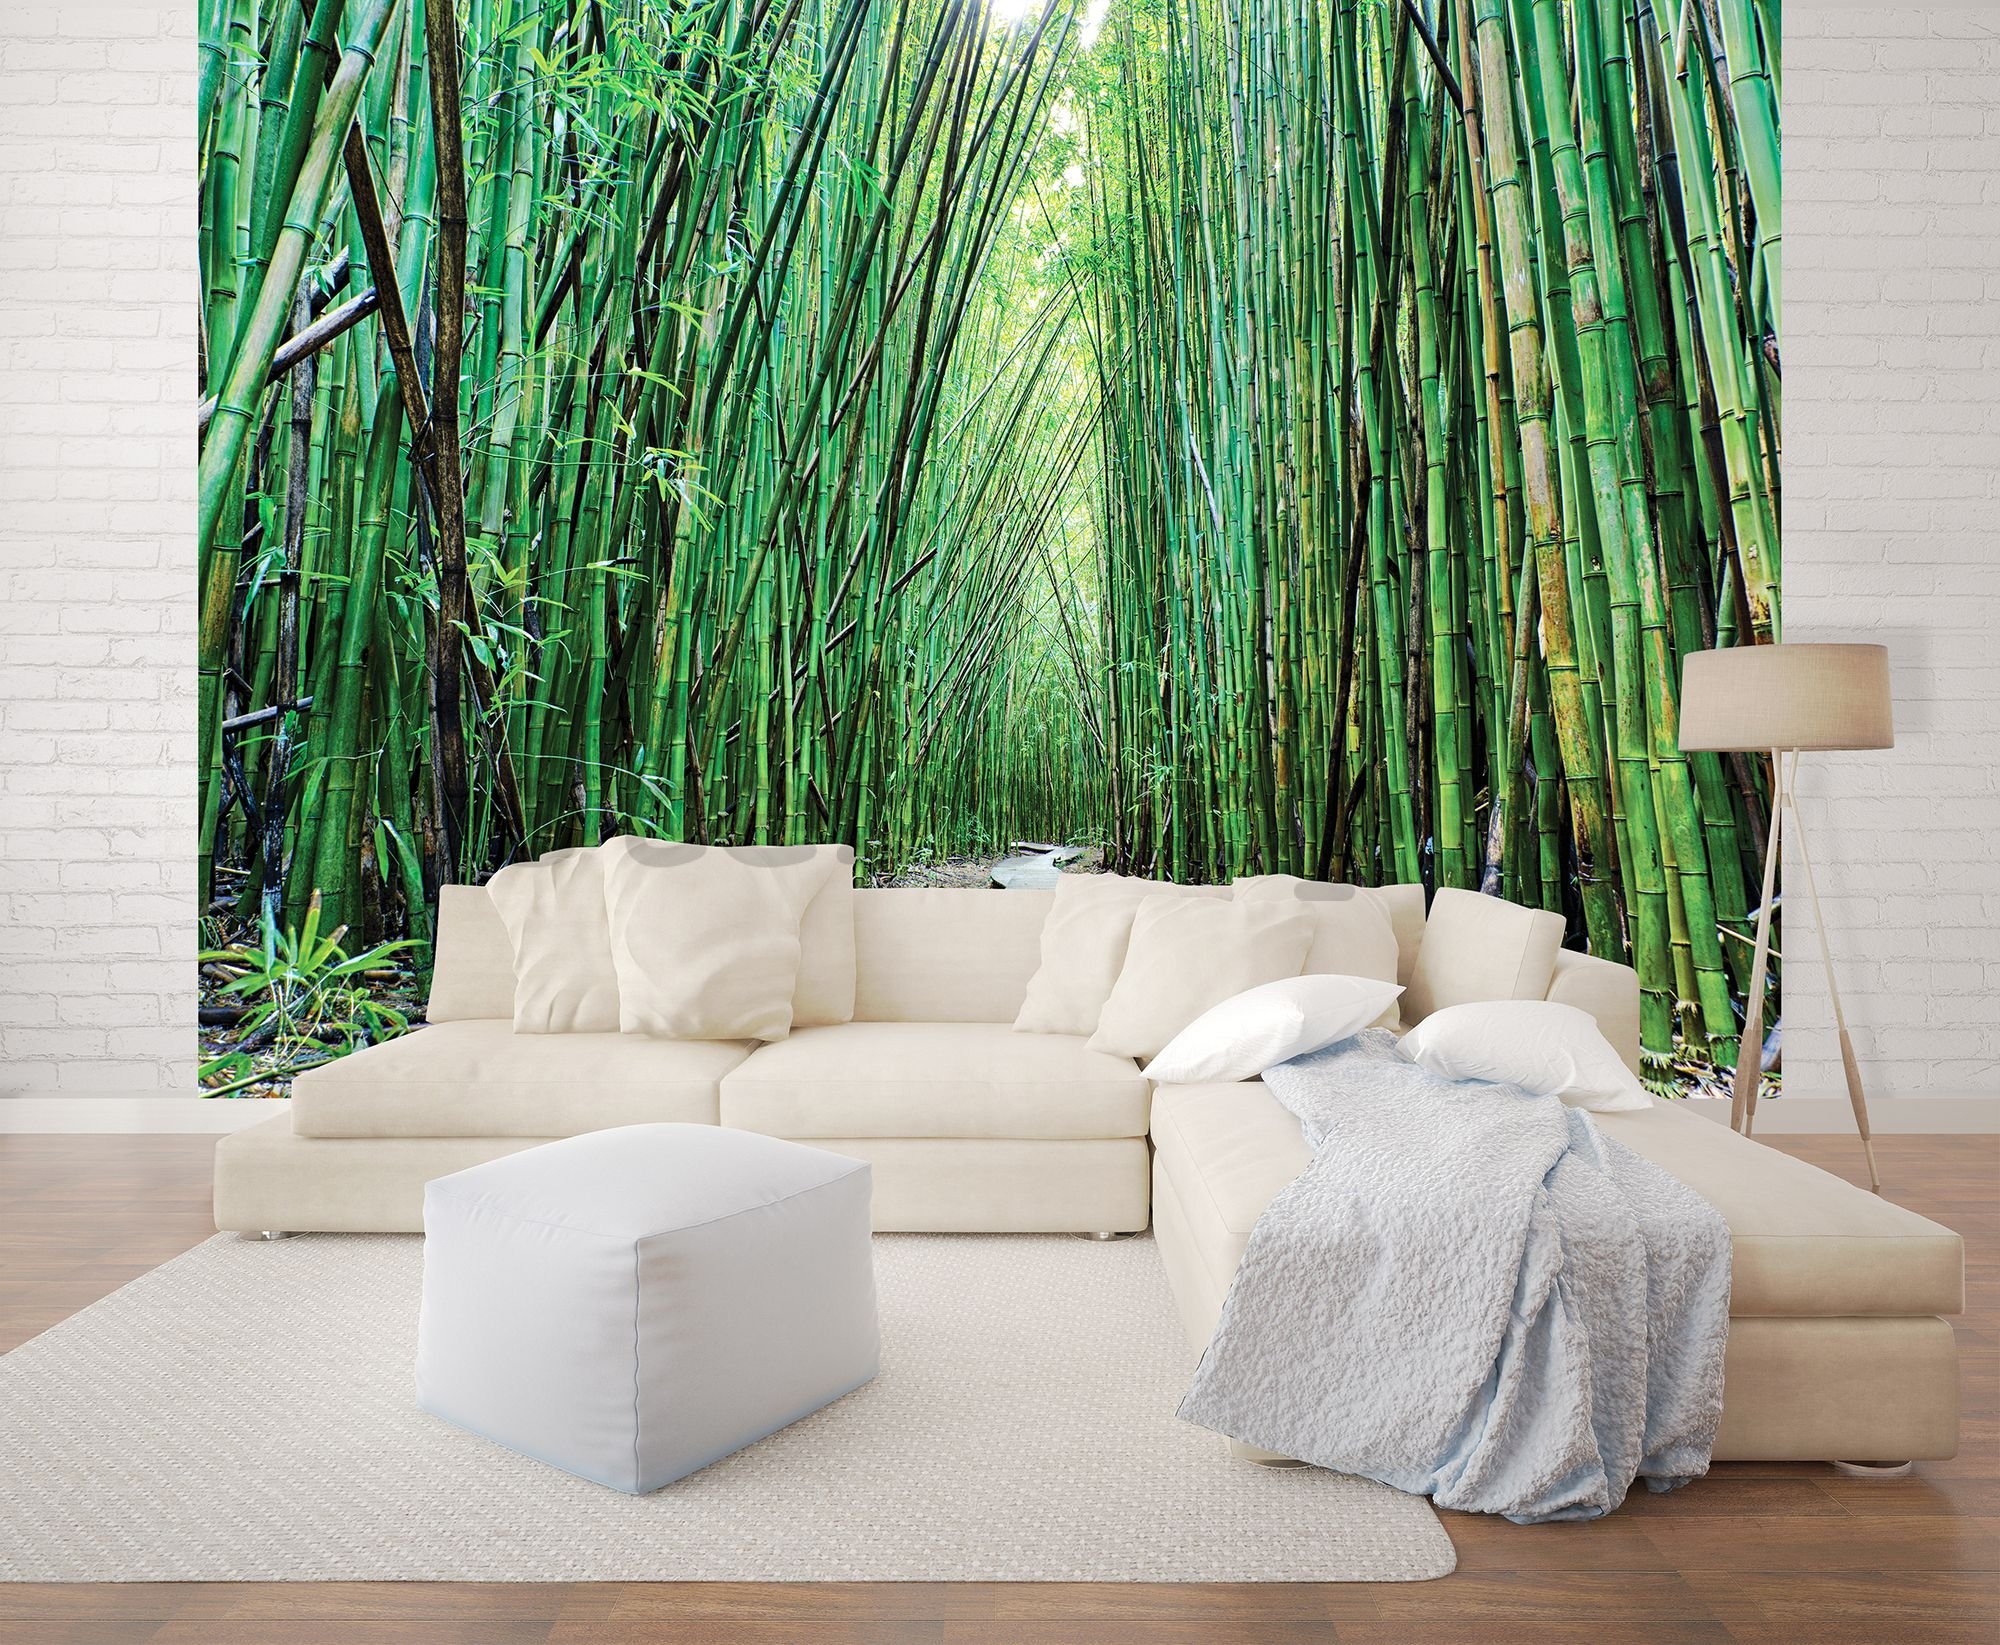 Fototapeta vliesová: Les bambusu (2) - 254x368 cm